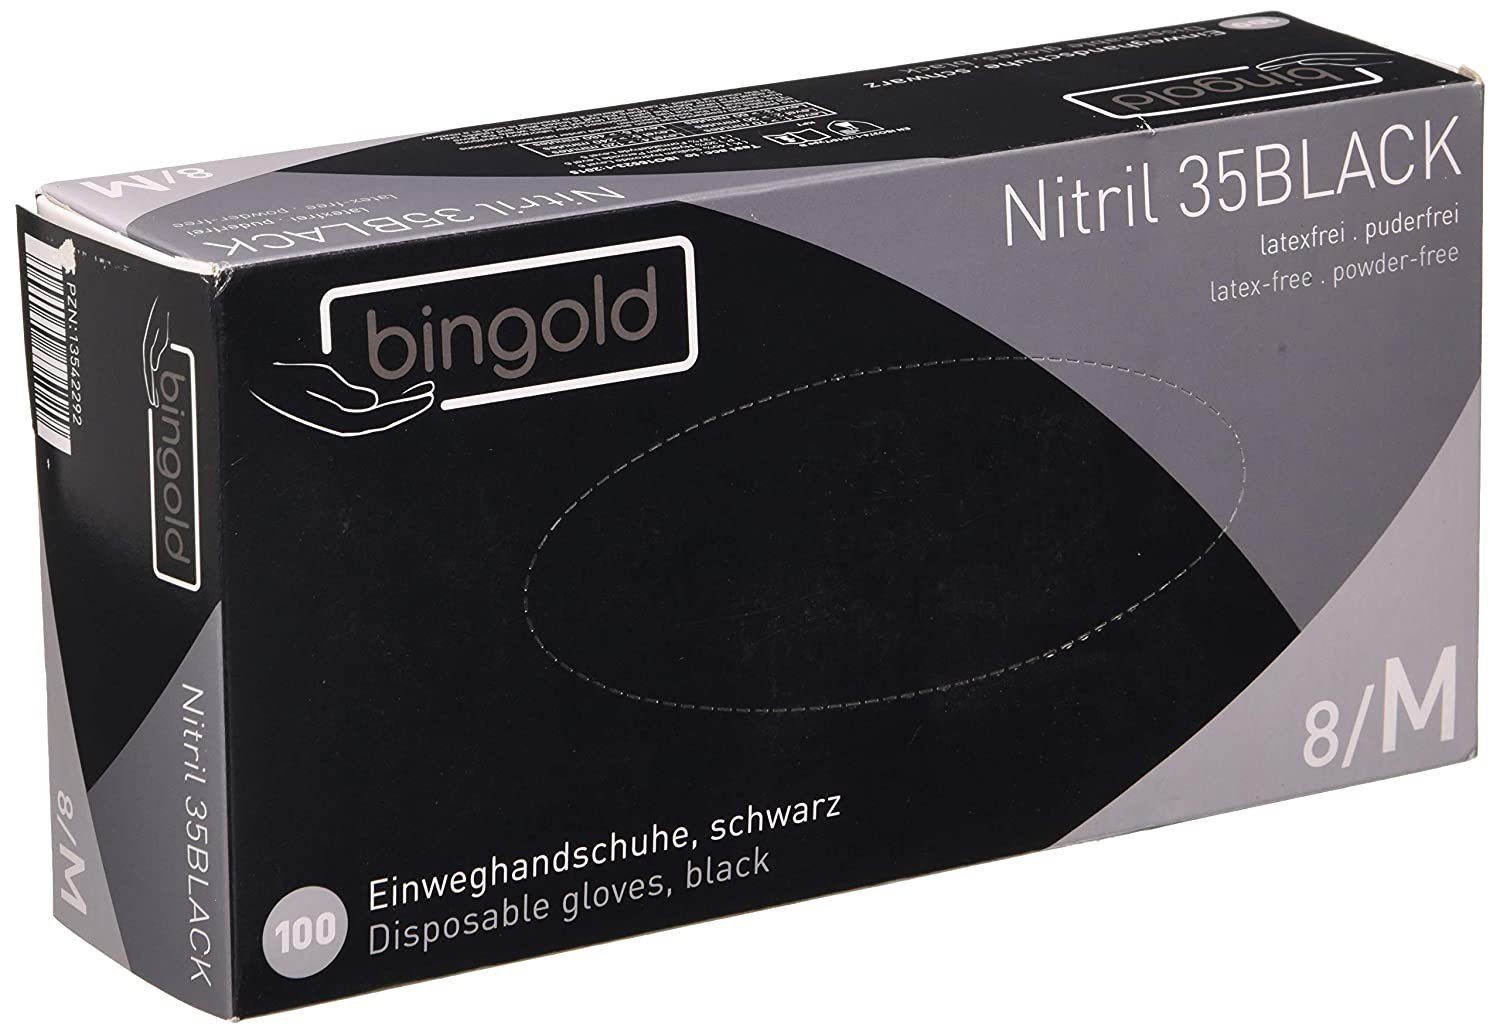 Metamorph Einweghandschuhe Bingold Nitril 35Black - Einweghandschuhe - schwar